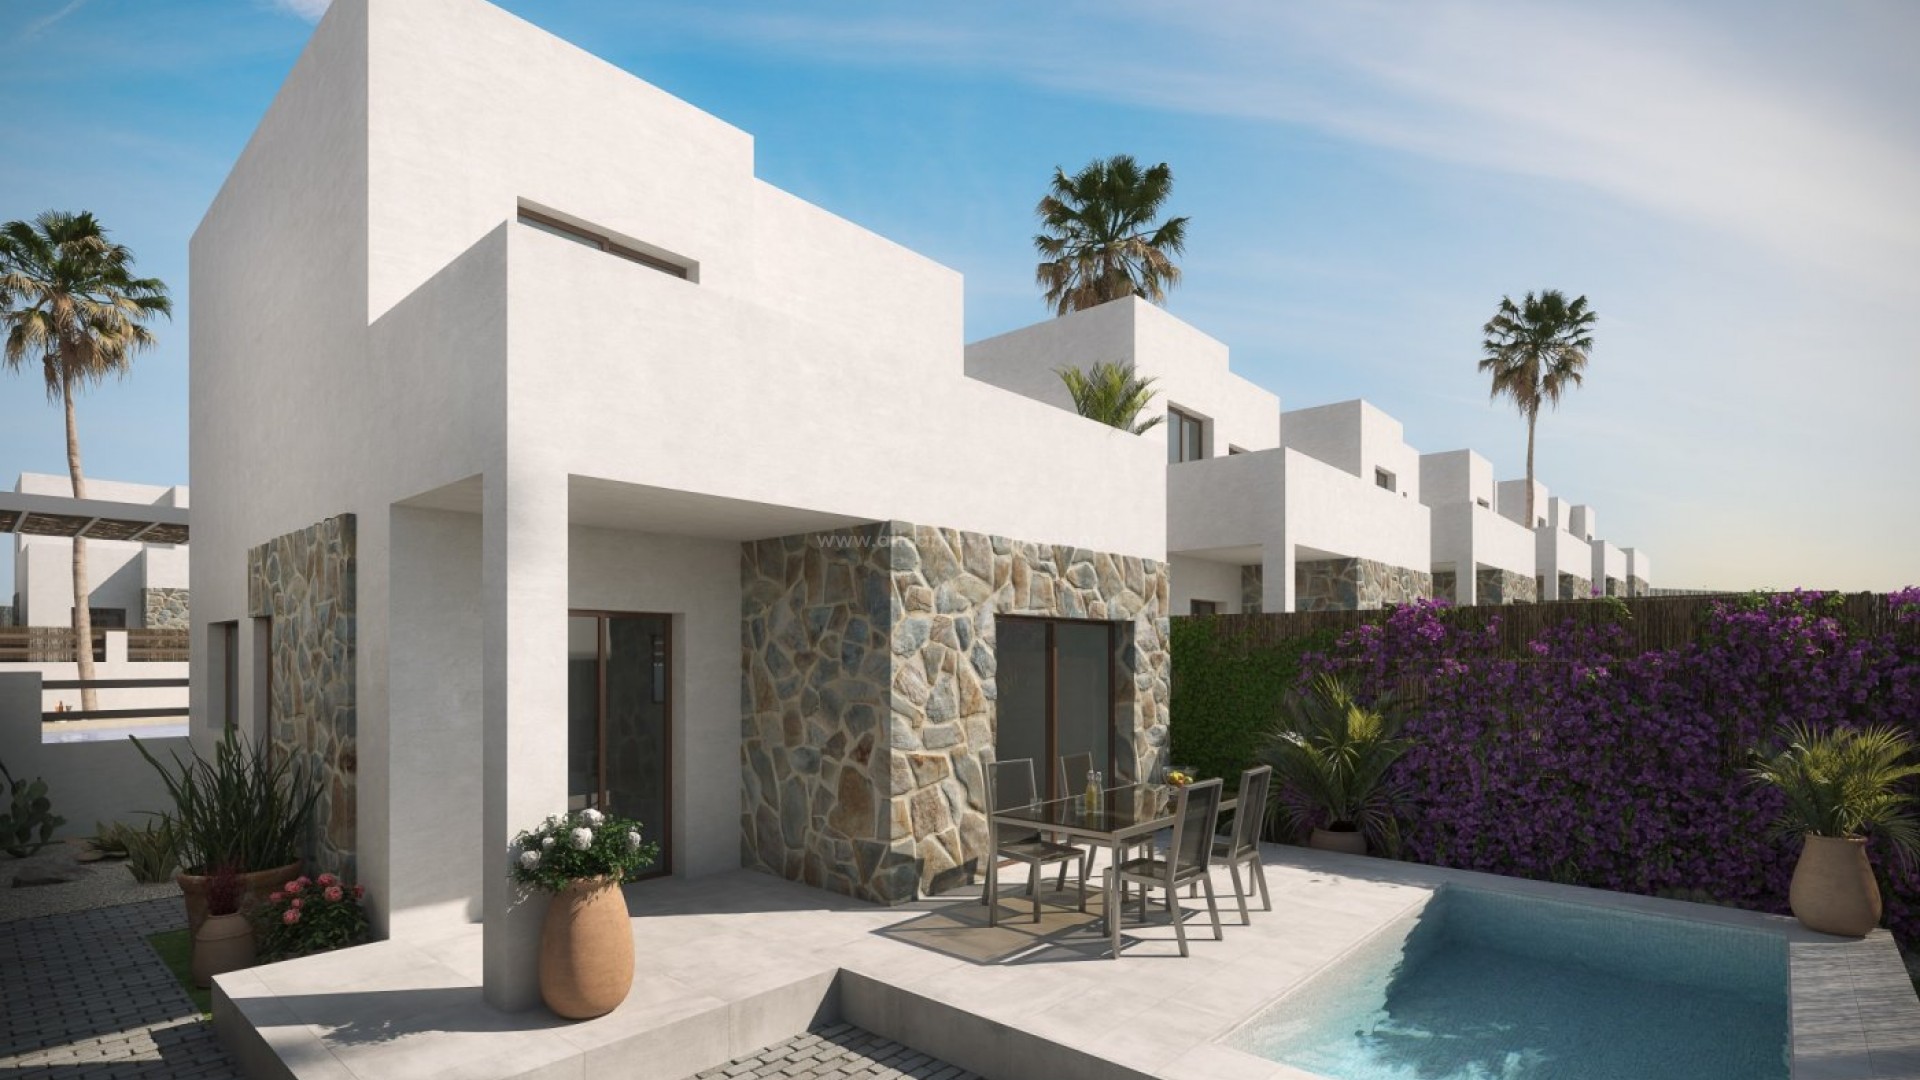 25 nye villaer/hus i Orihuela Costa, 3 soverom og 2 bad, privat hage, felles basseng (privat basseng mot tillegg), parkering, nær Villamartin golfbane 